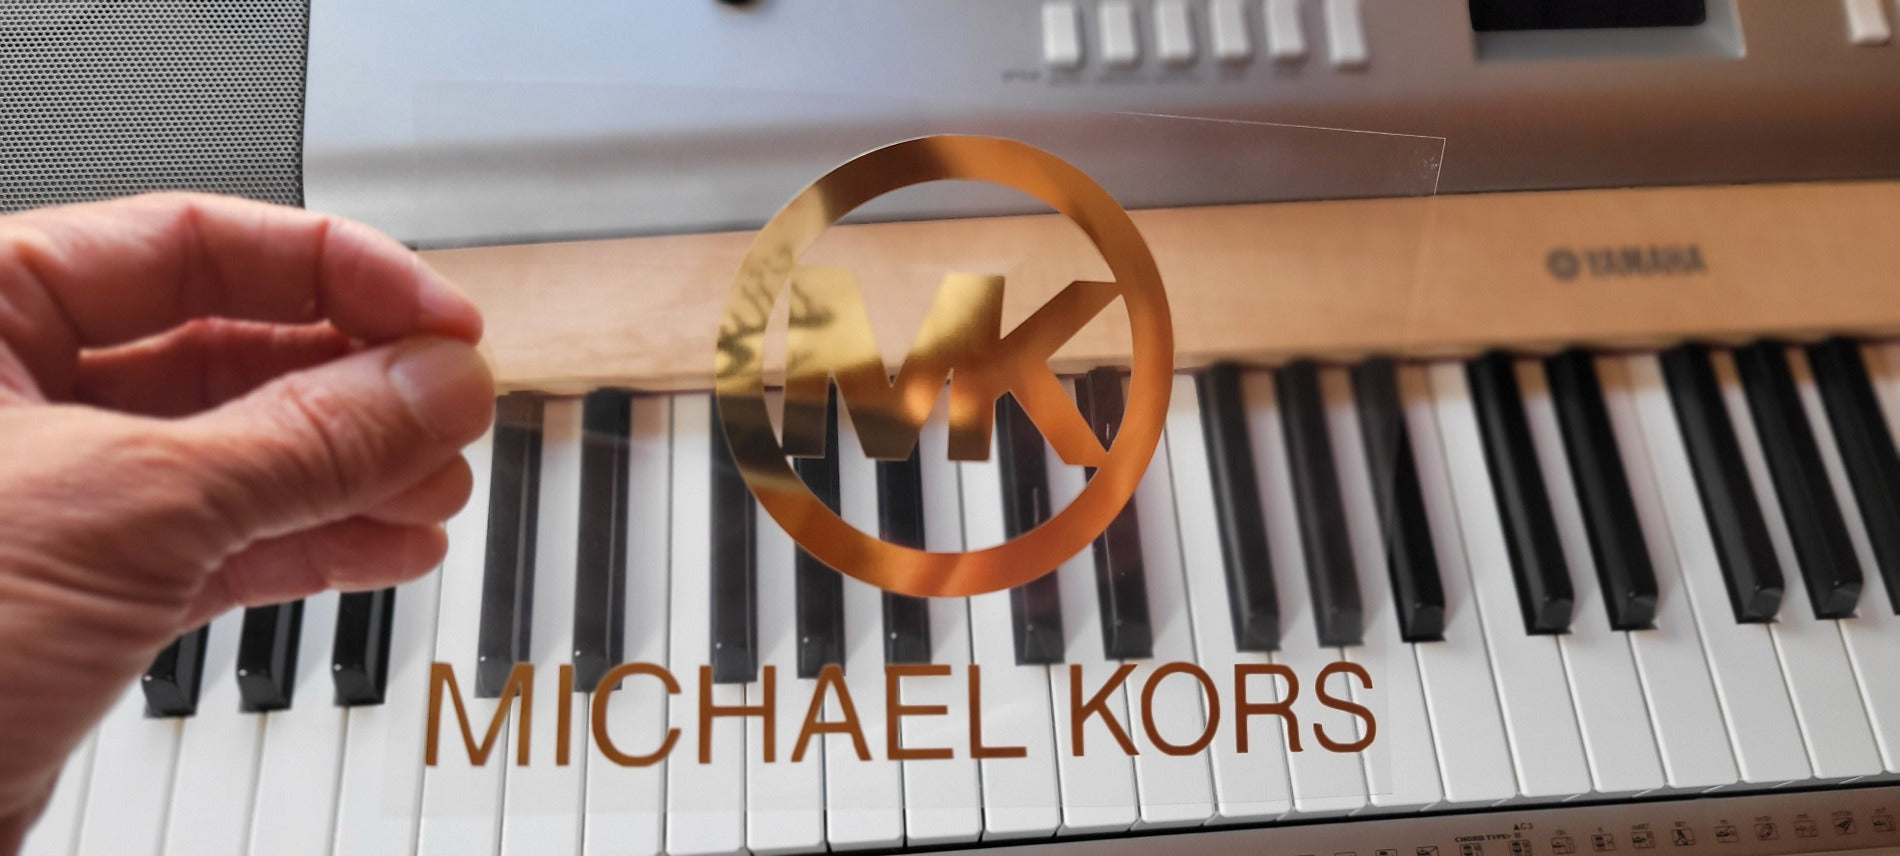 MK Michael Kors Brand Logo Iron-on Decal (heat transfer) – Customeazy